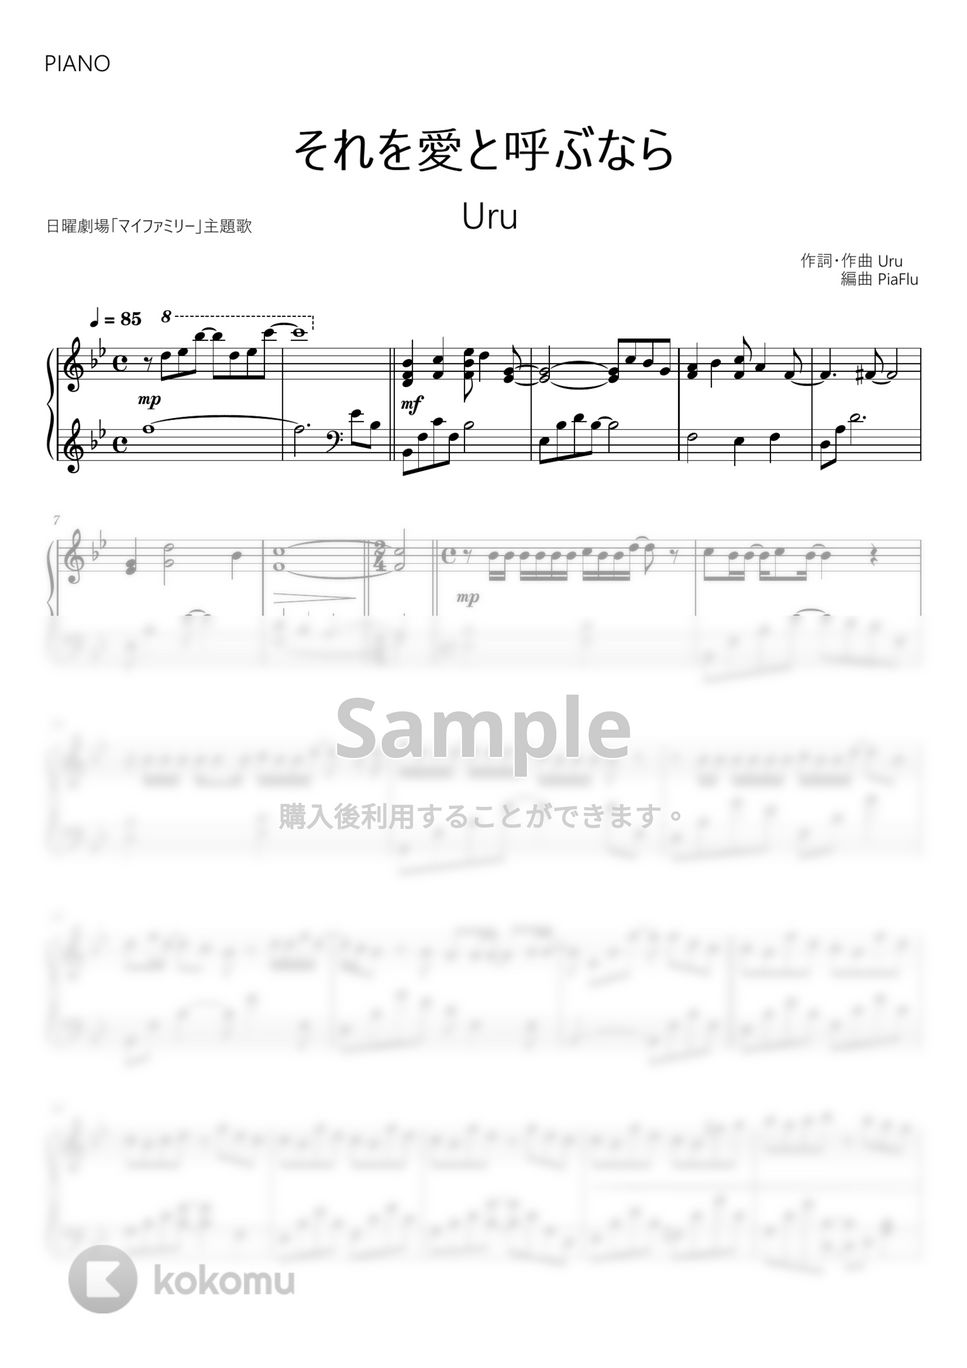 Uru - それを愛と呼ぶなら (ピアノ) by PiaFlu